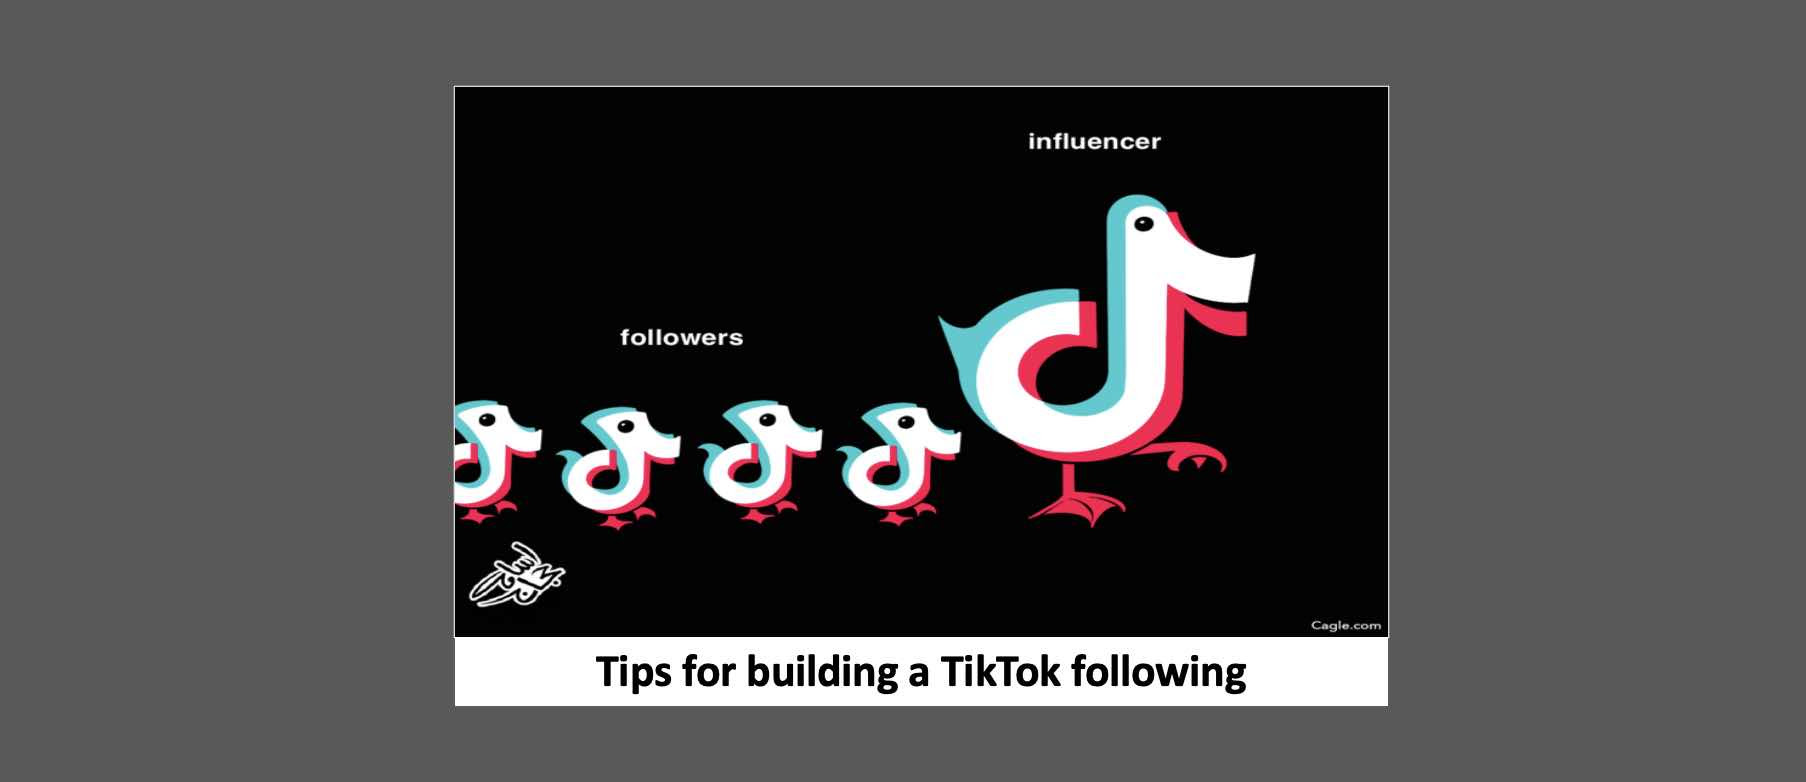 Tips to build a TikTok following